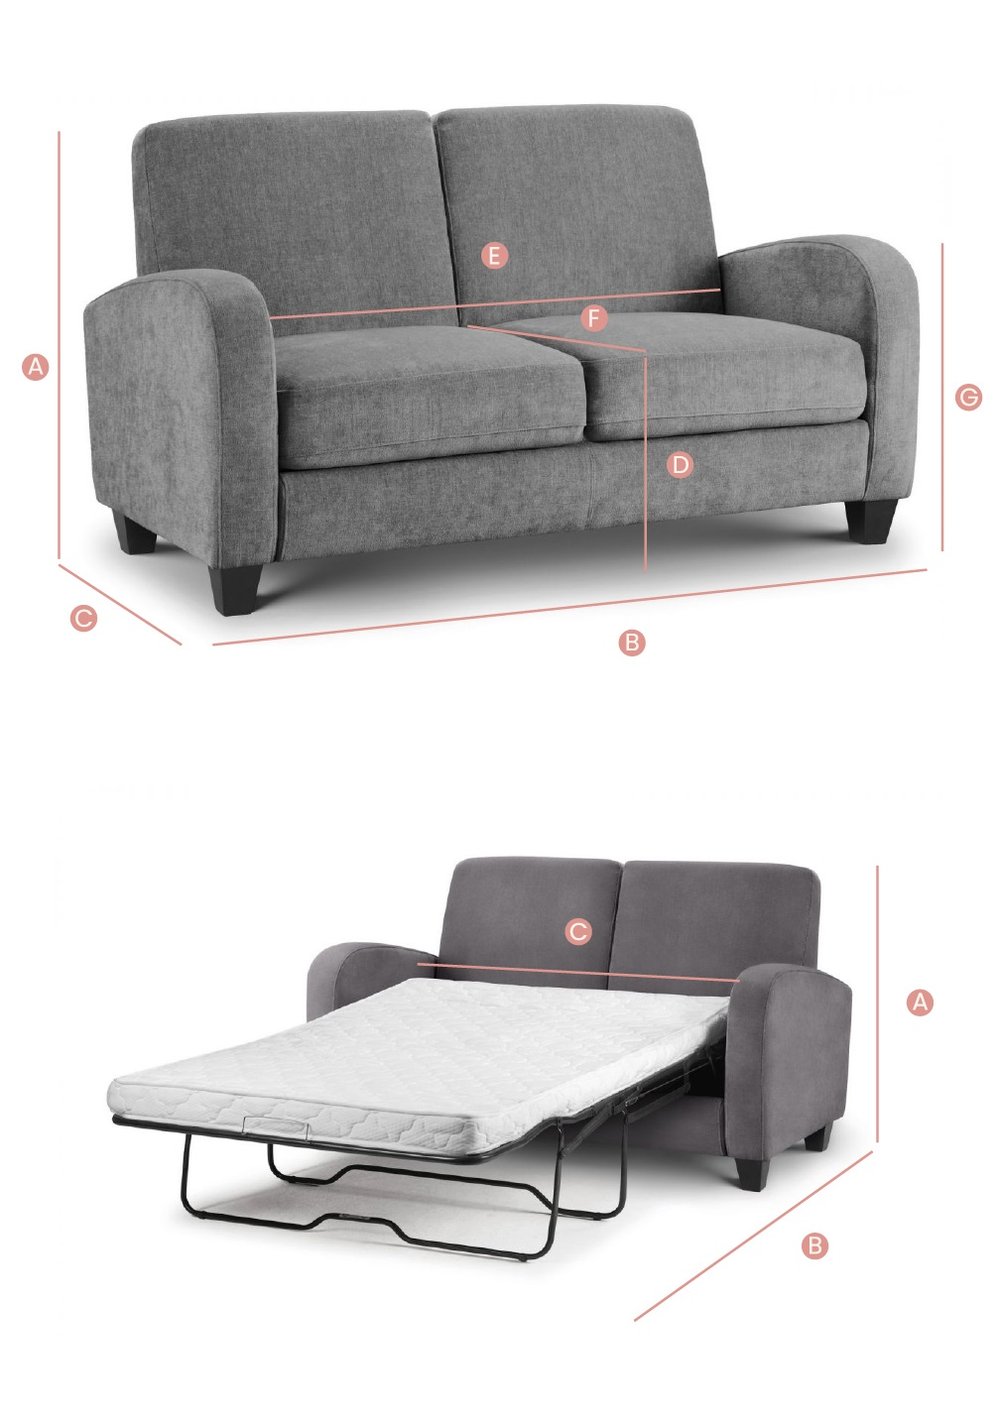 Happy Beds Vivo Grey Sofa Bed Sitting Position Sketch Dimensions